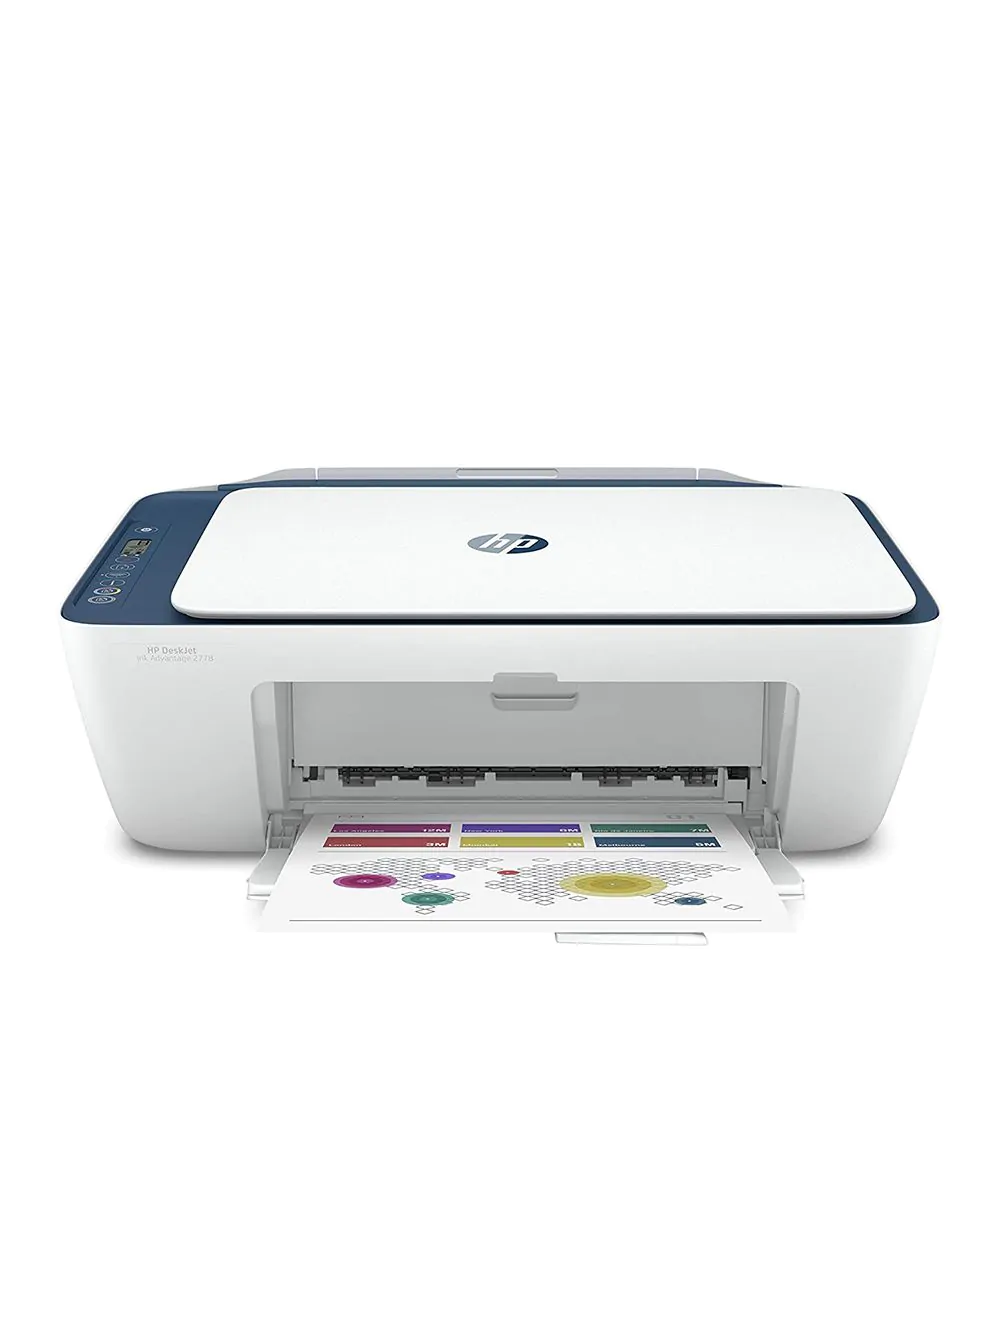 Buy HP DeskJet Ink Efficient 2778 Printer at Best Price